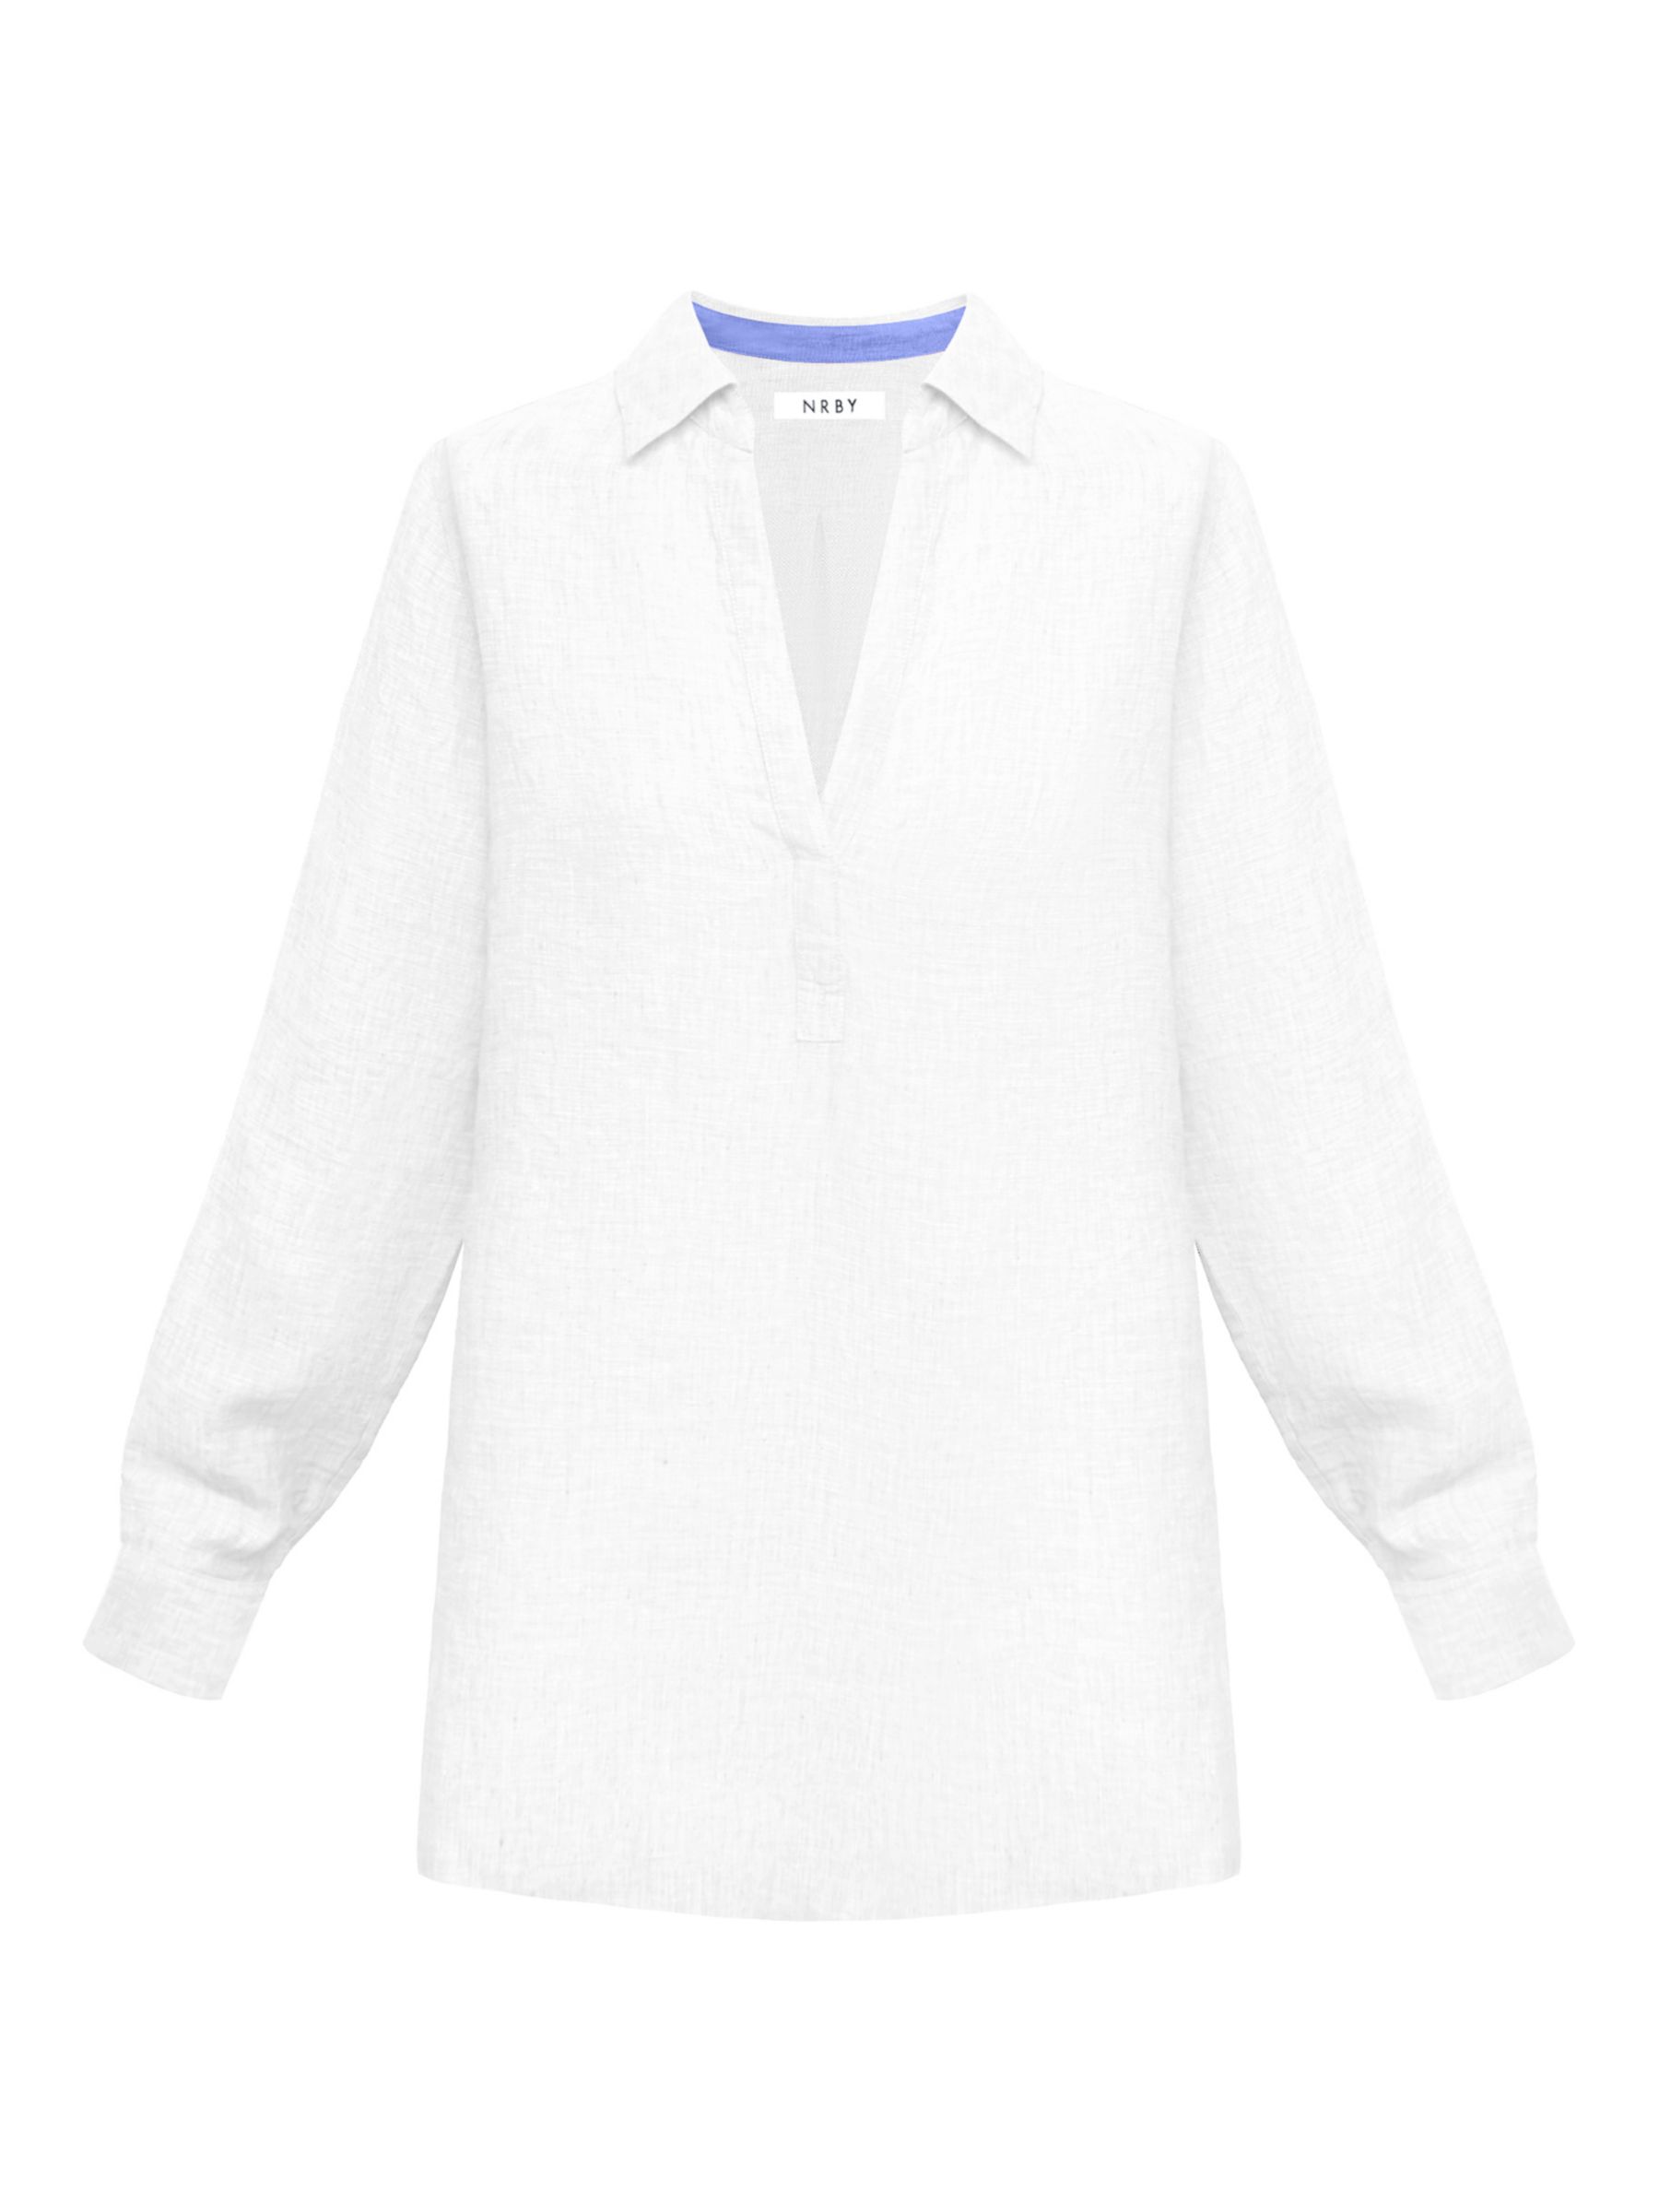 NRBY Chrissie Linen Shirt, White, XS